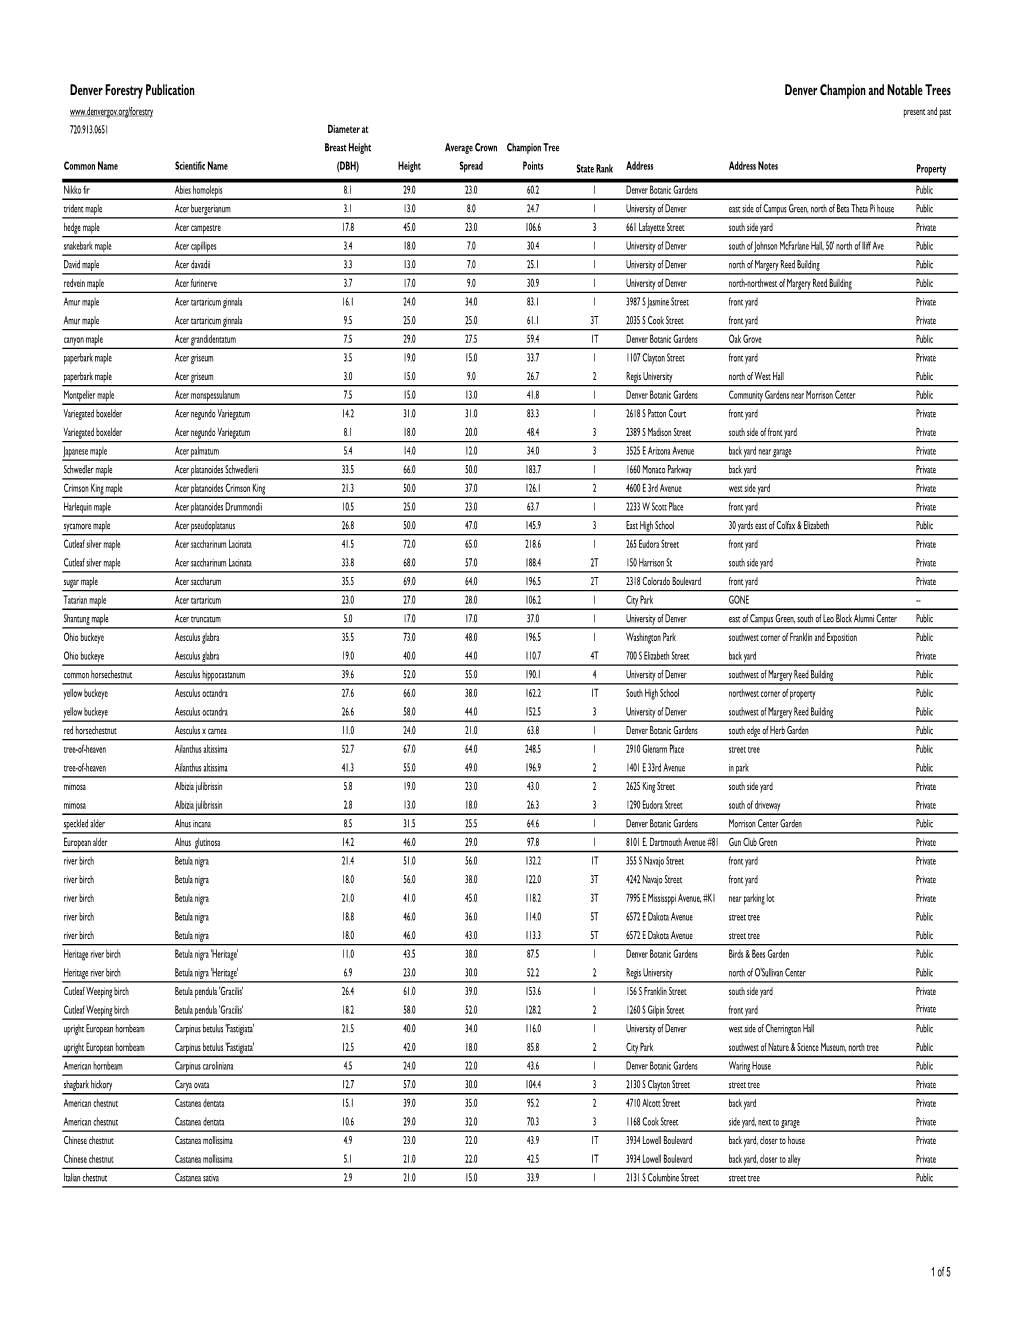 Champion Tree Registry Master List 2008